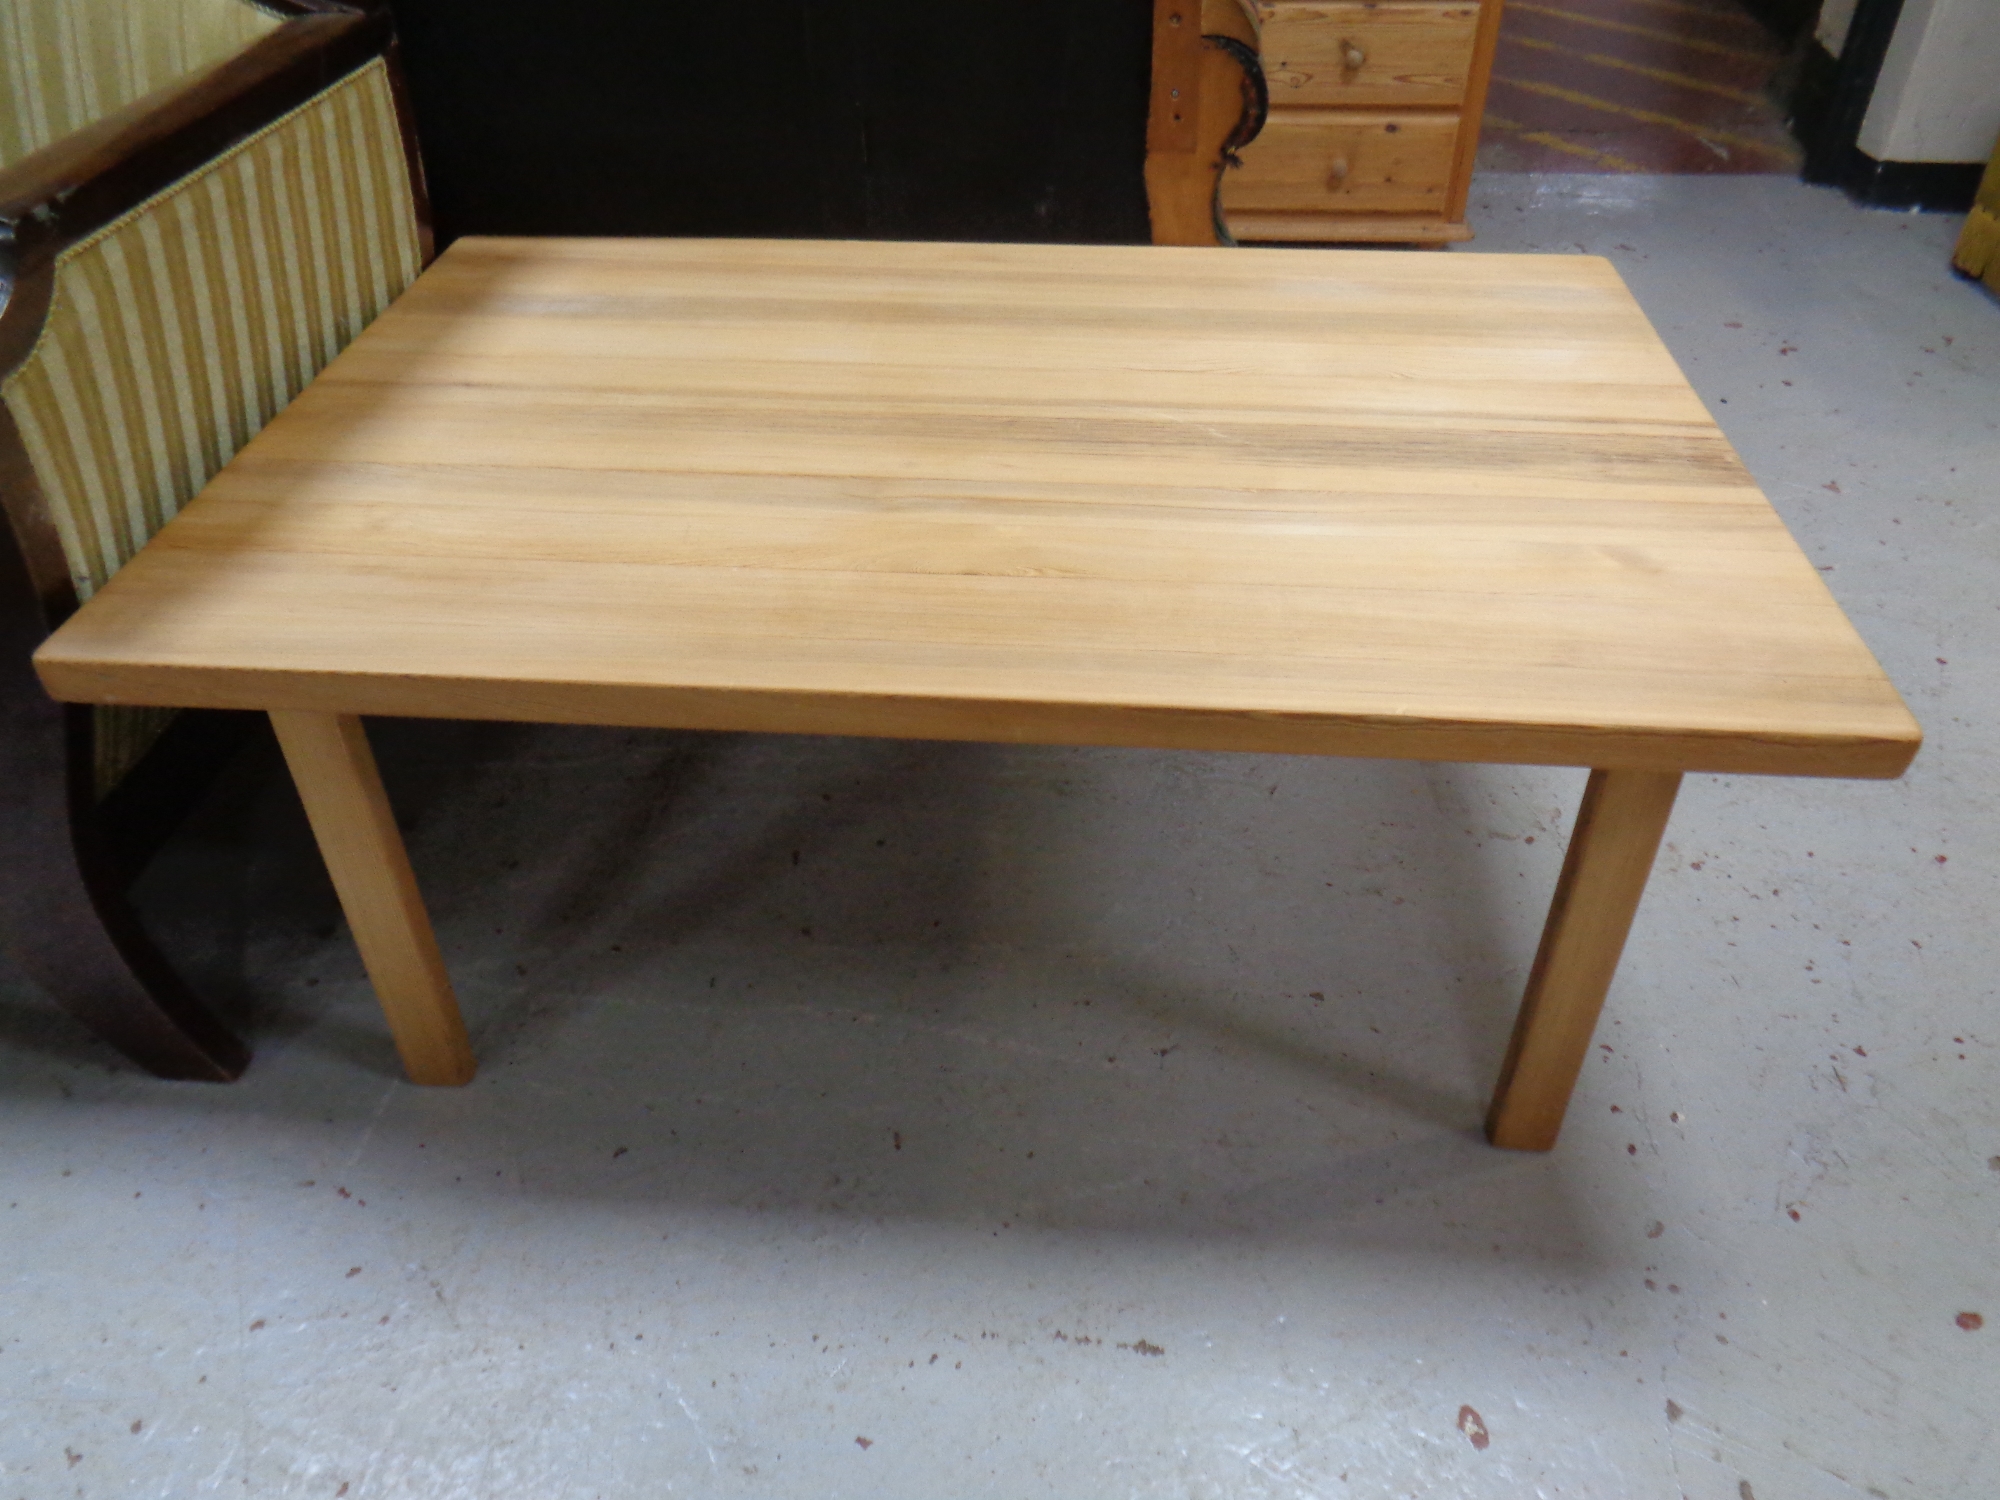 A rectangular pine coffee table